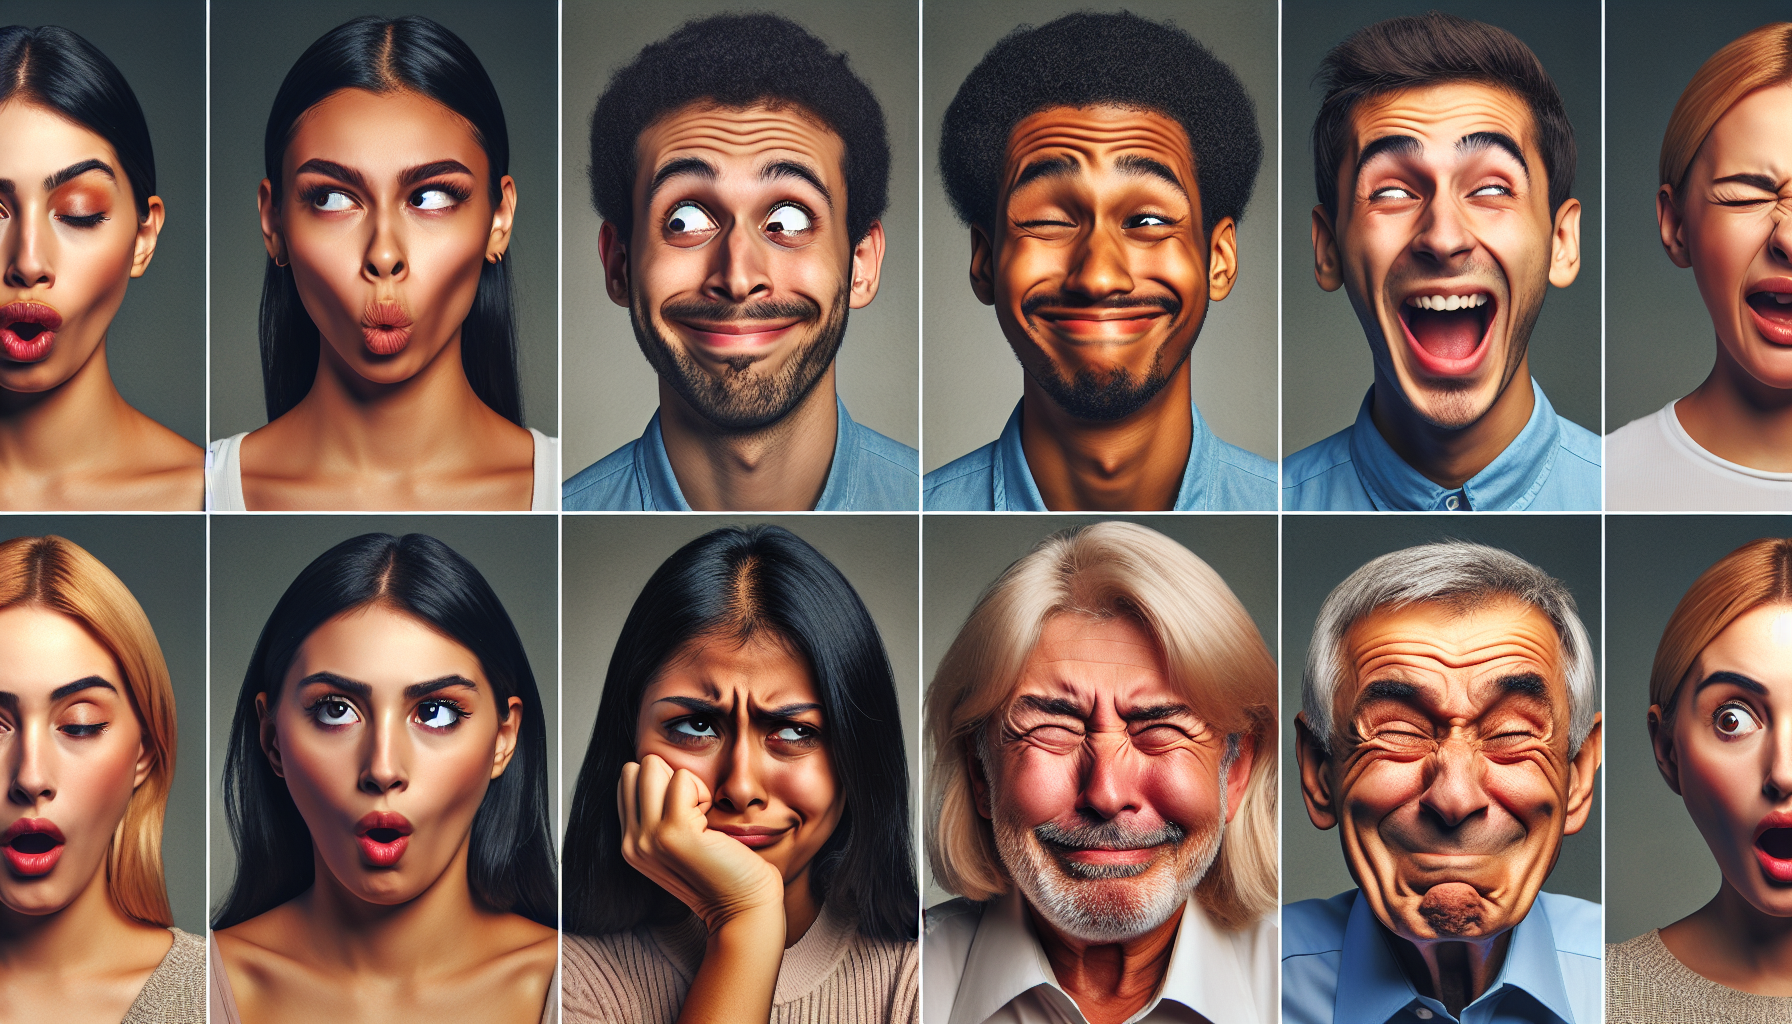 Various facial expressions depicting emotions